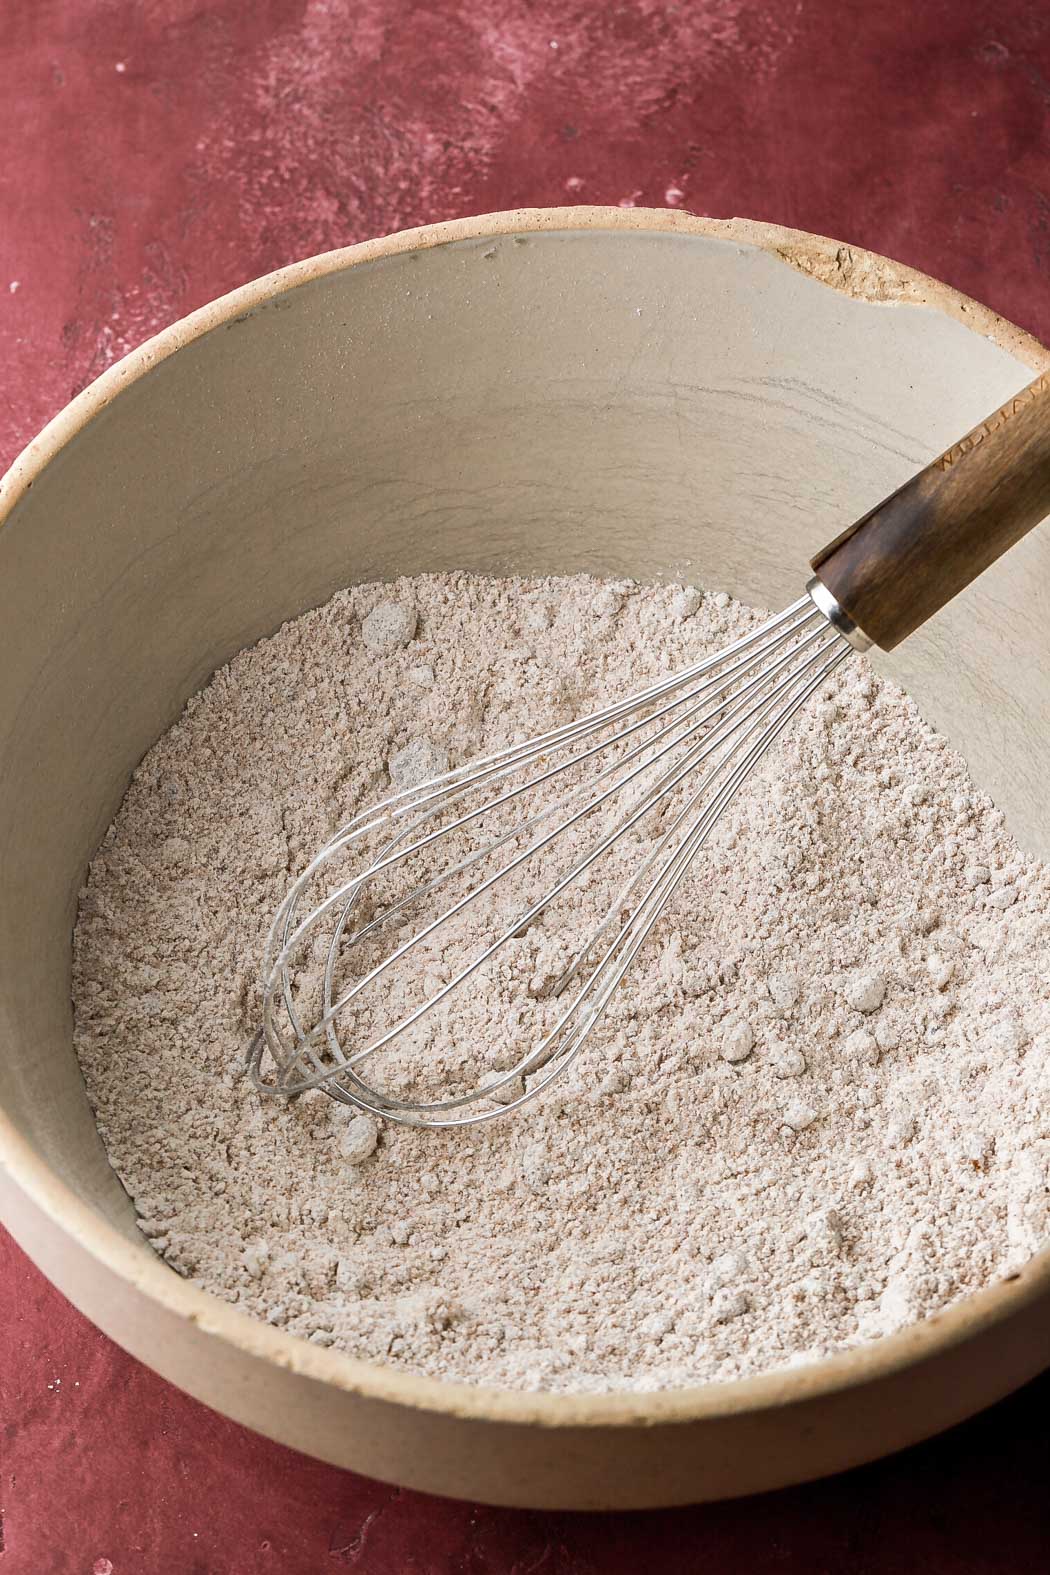 whisk together the flour, sugar, baking powder, baking soda, spice and salt.